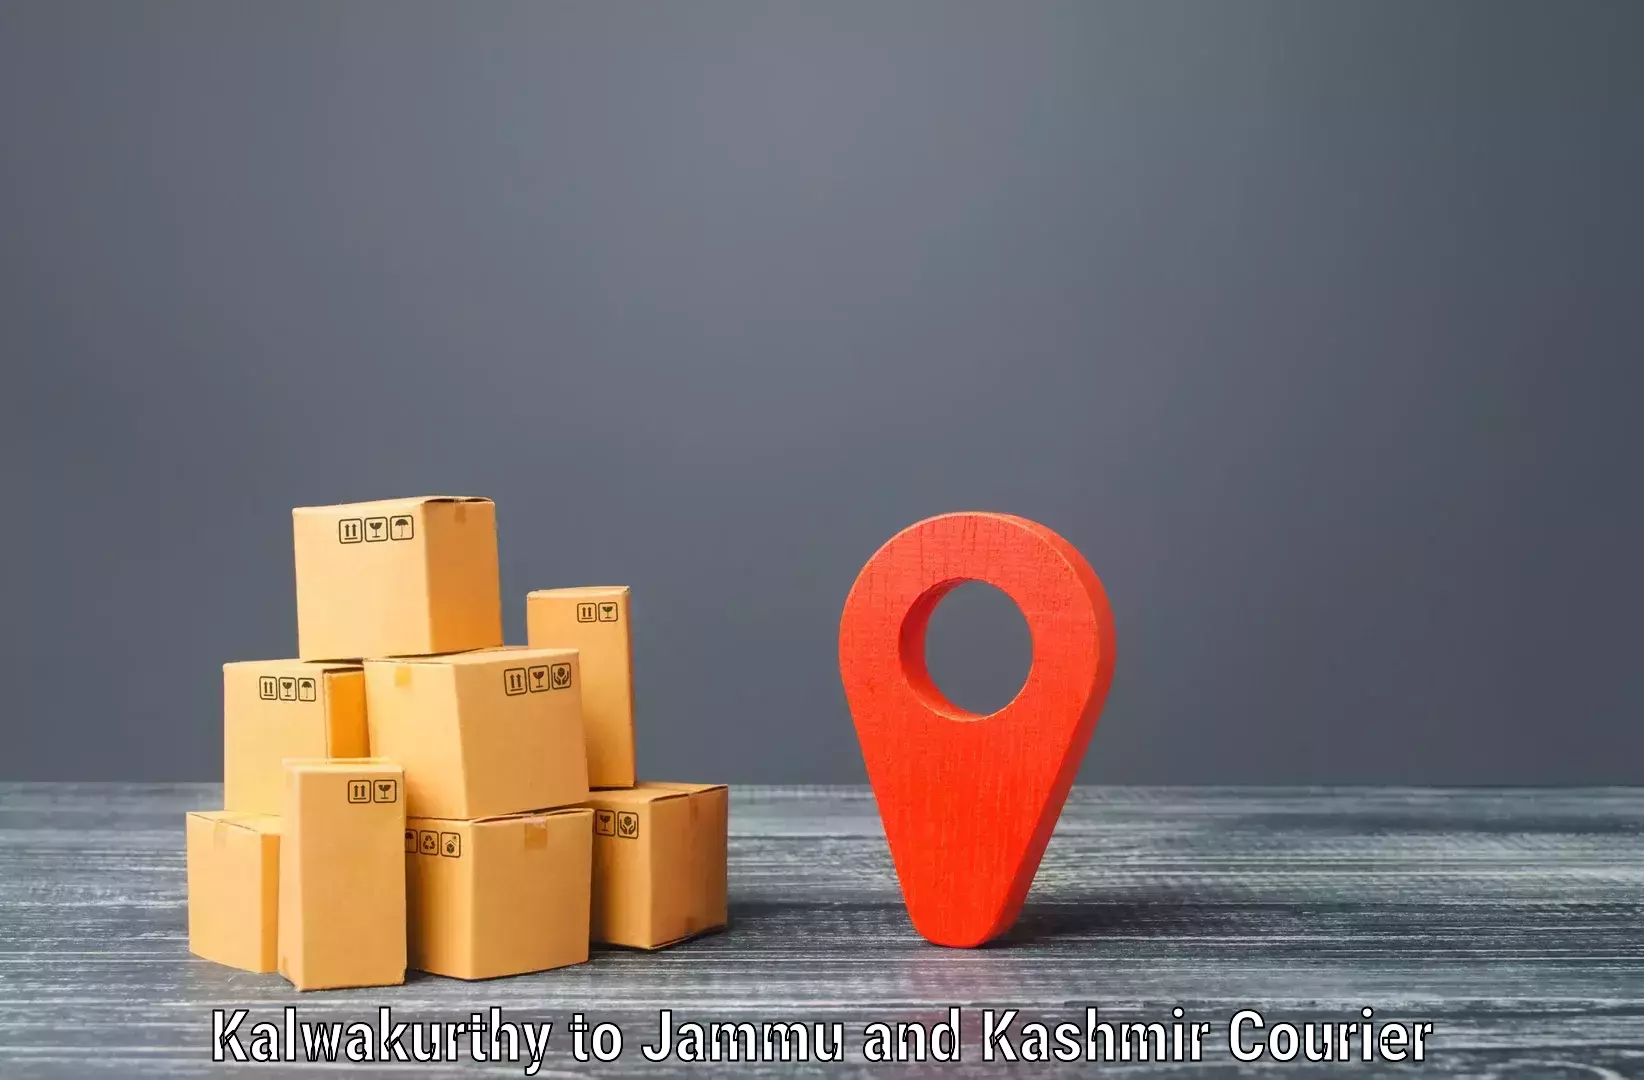 Online package tracking Kalwakurthy to Srinagar Kashmir